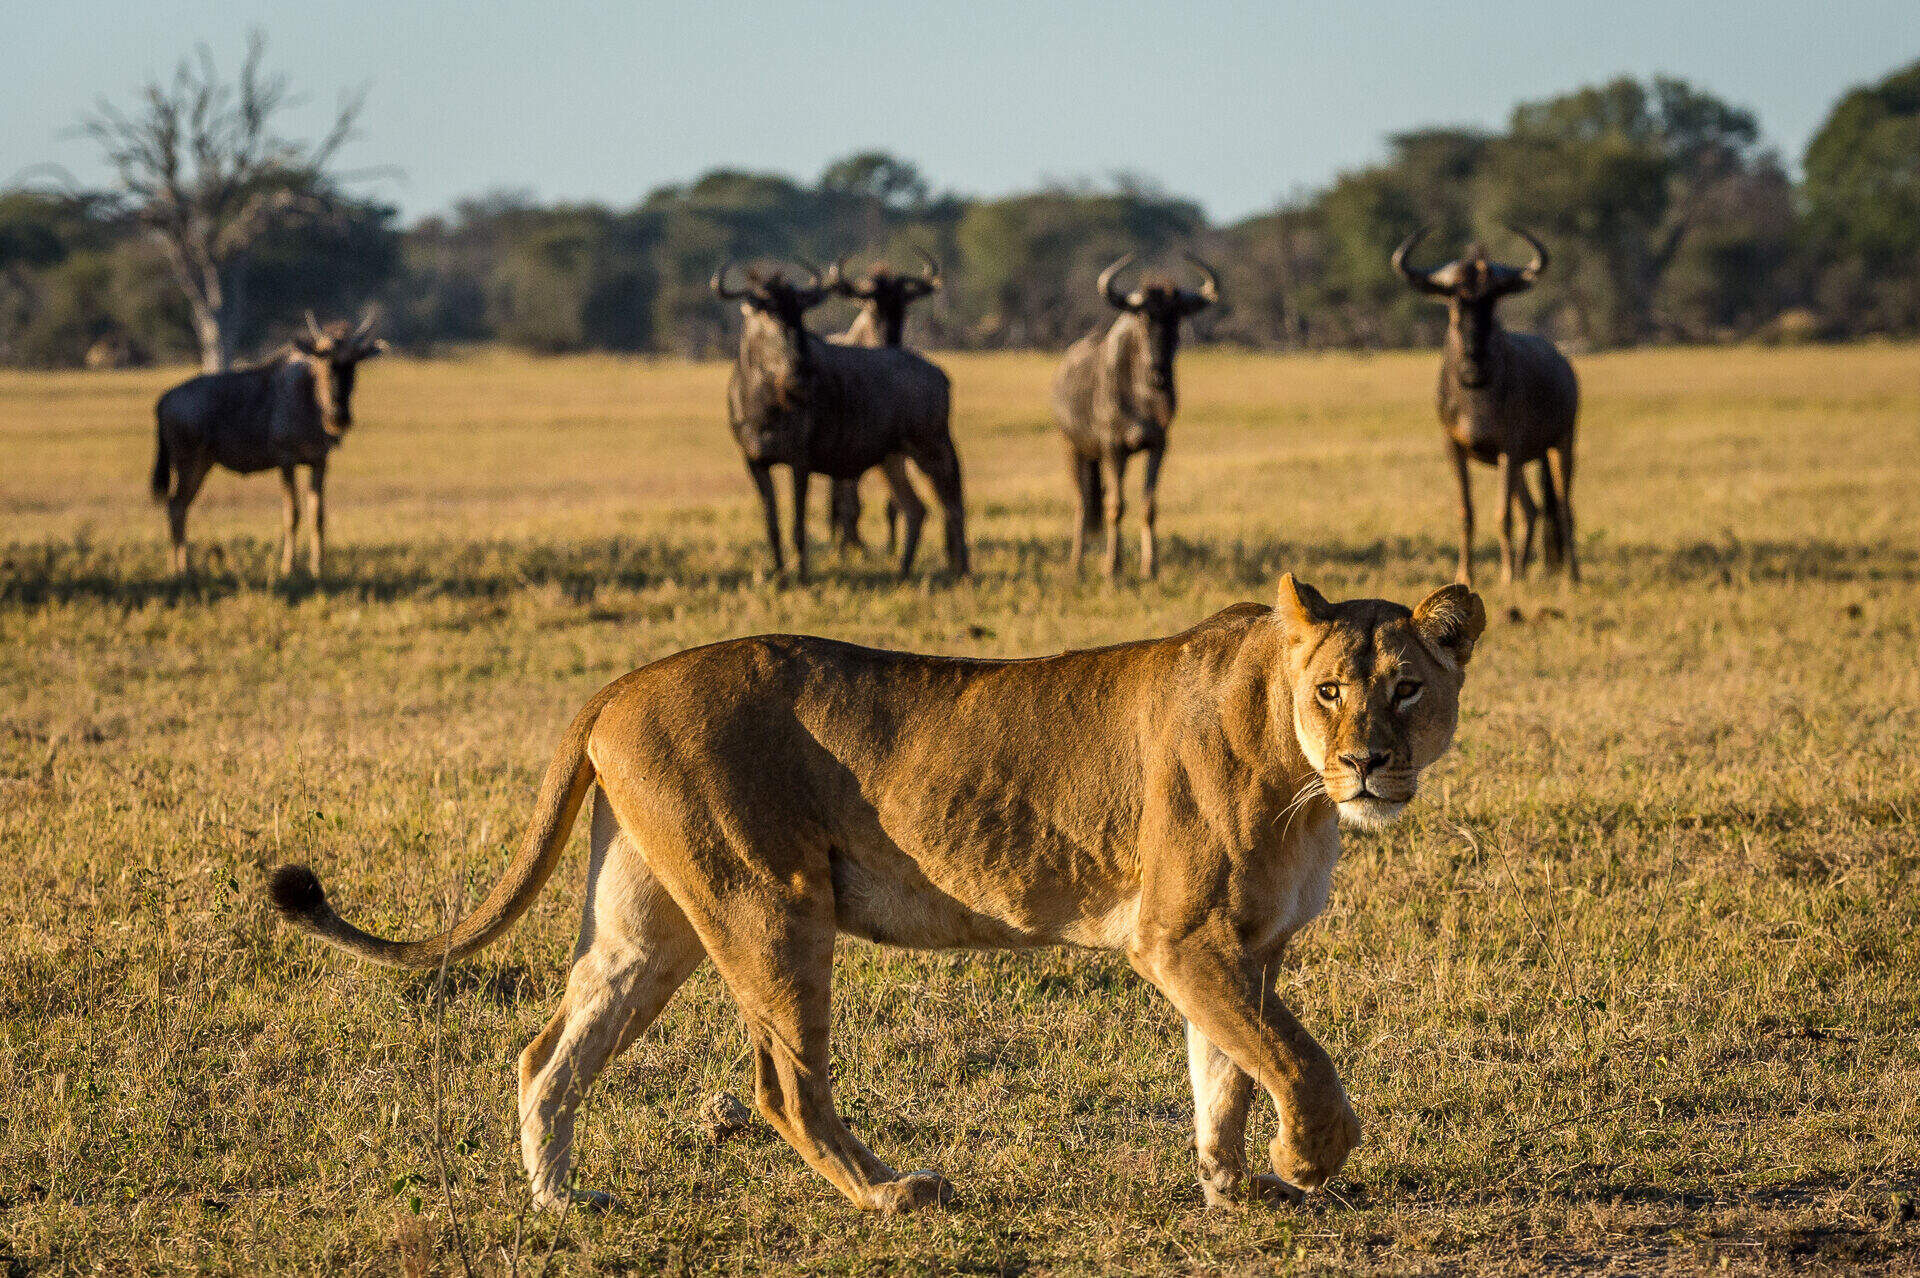 safari zimbabwe